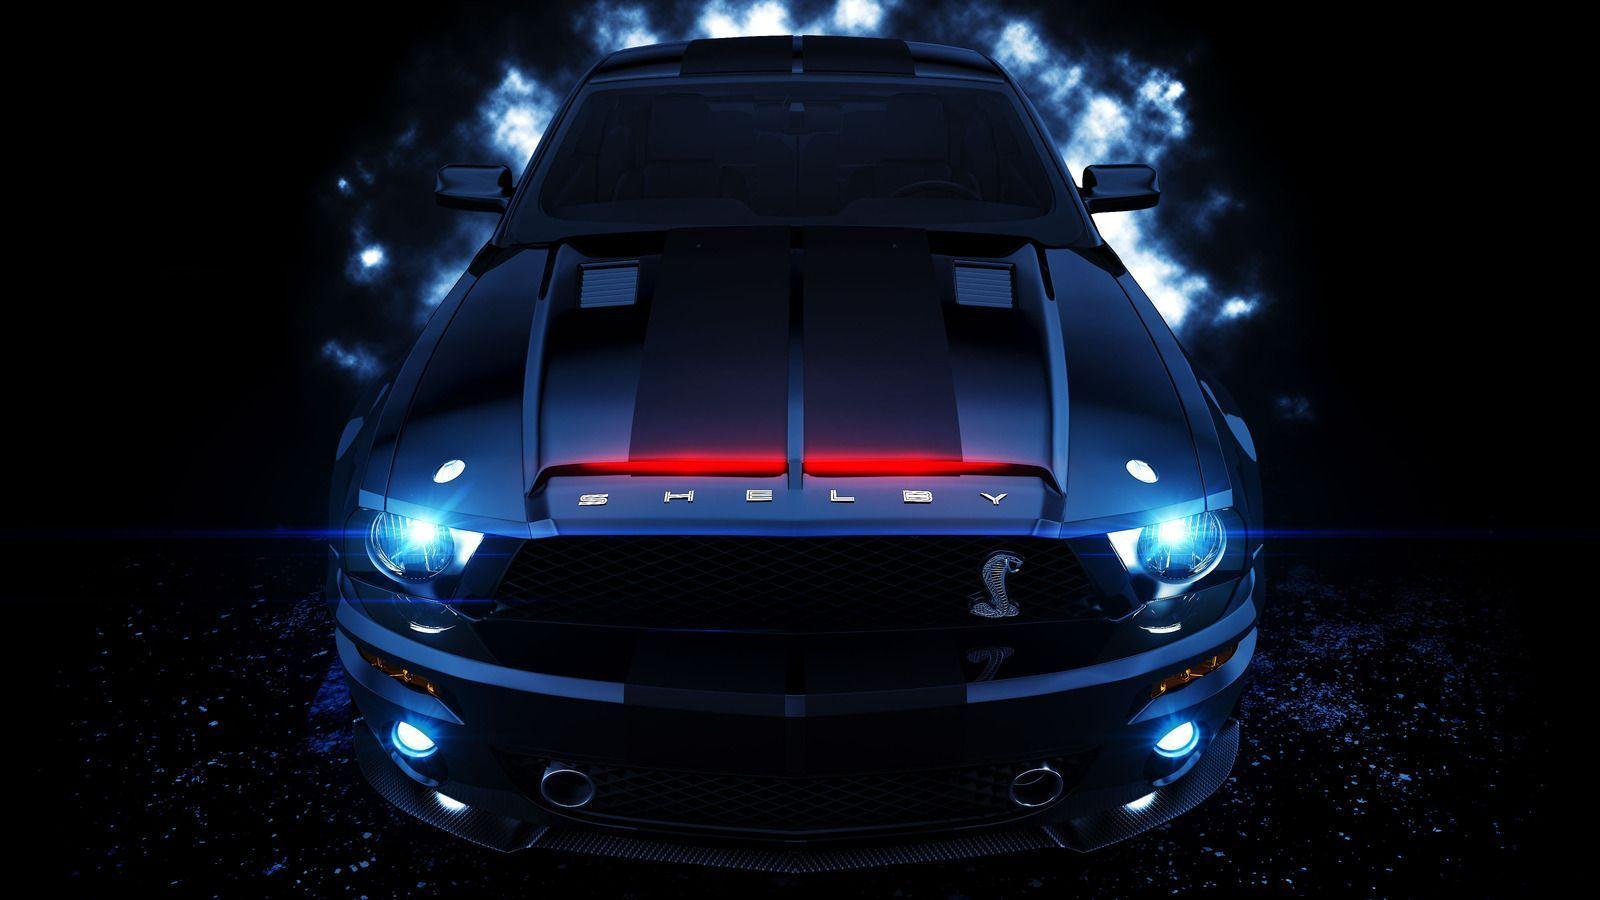 Ford Mustang Shelby Knight Rider HD Wallpaper Car